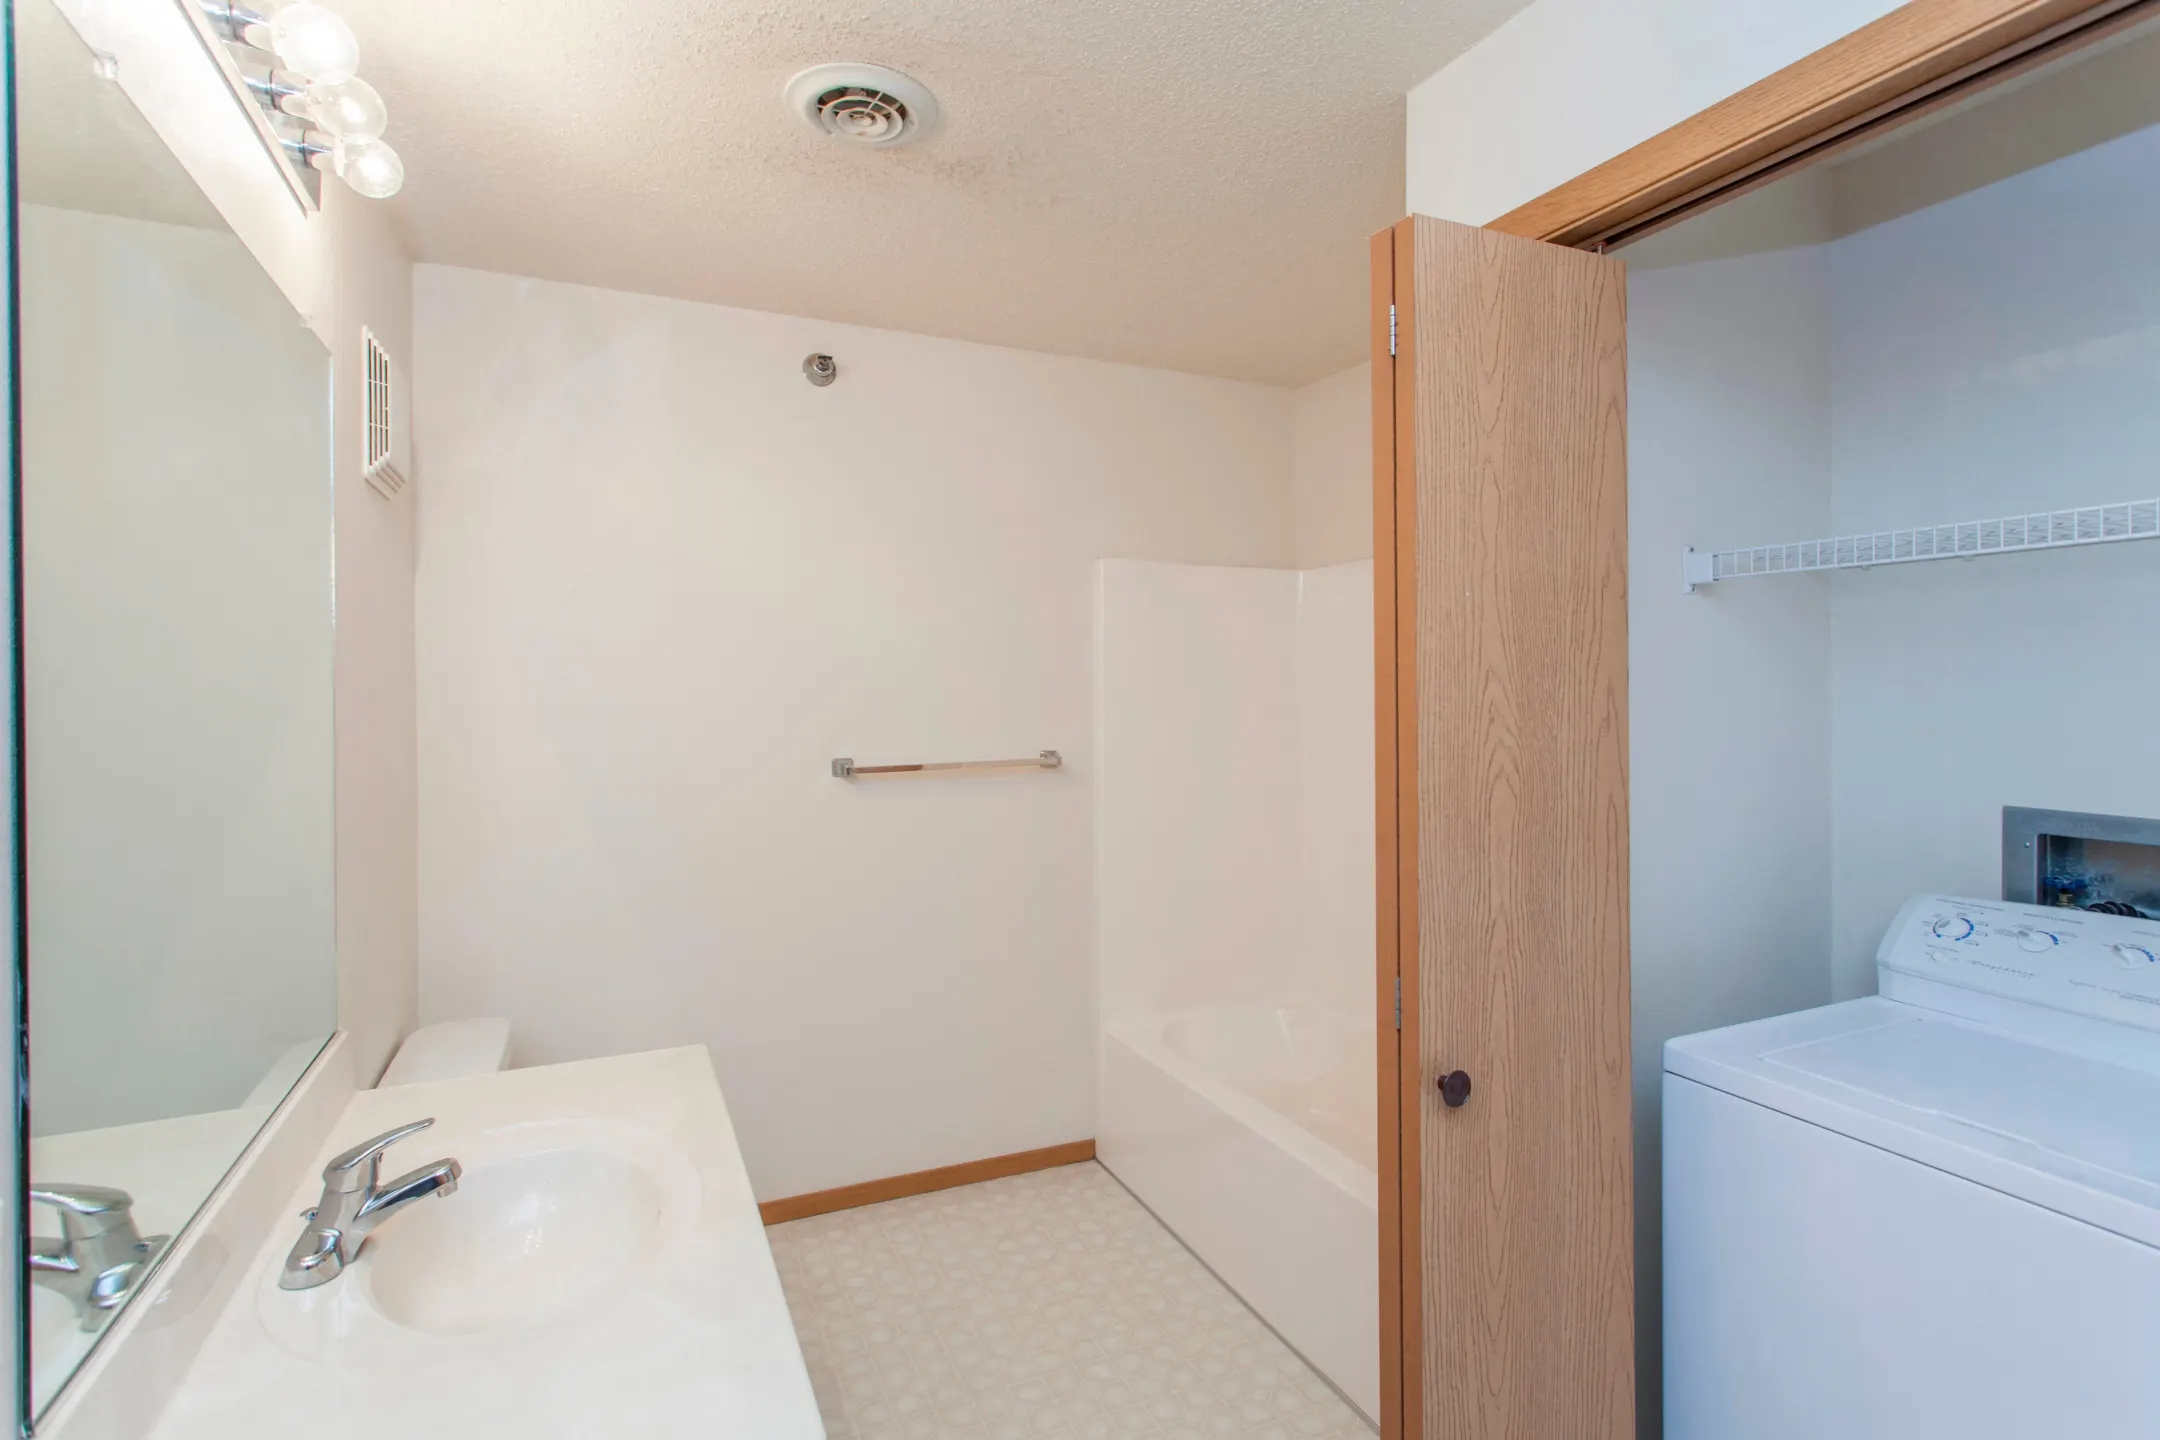 Bathroom - Platinum Valley Apartments - Sioux Falls, SD